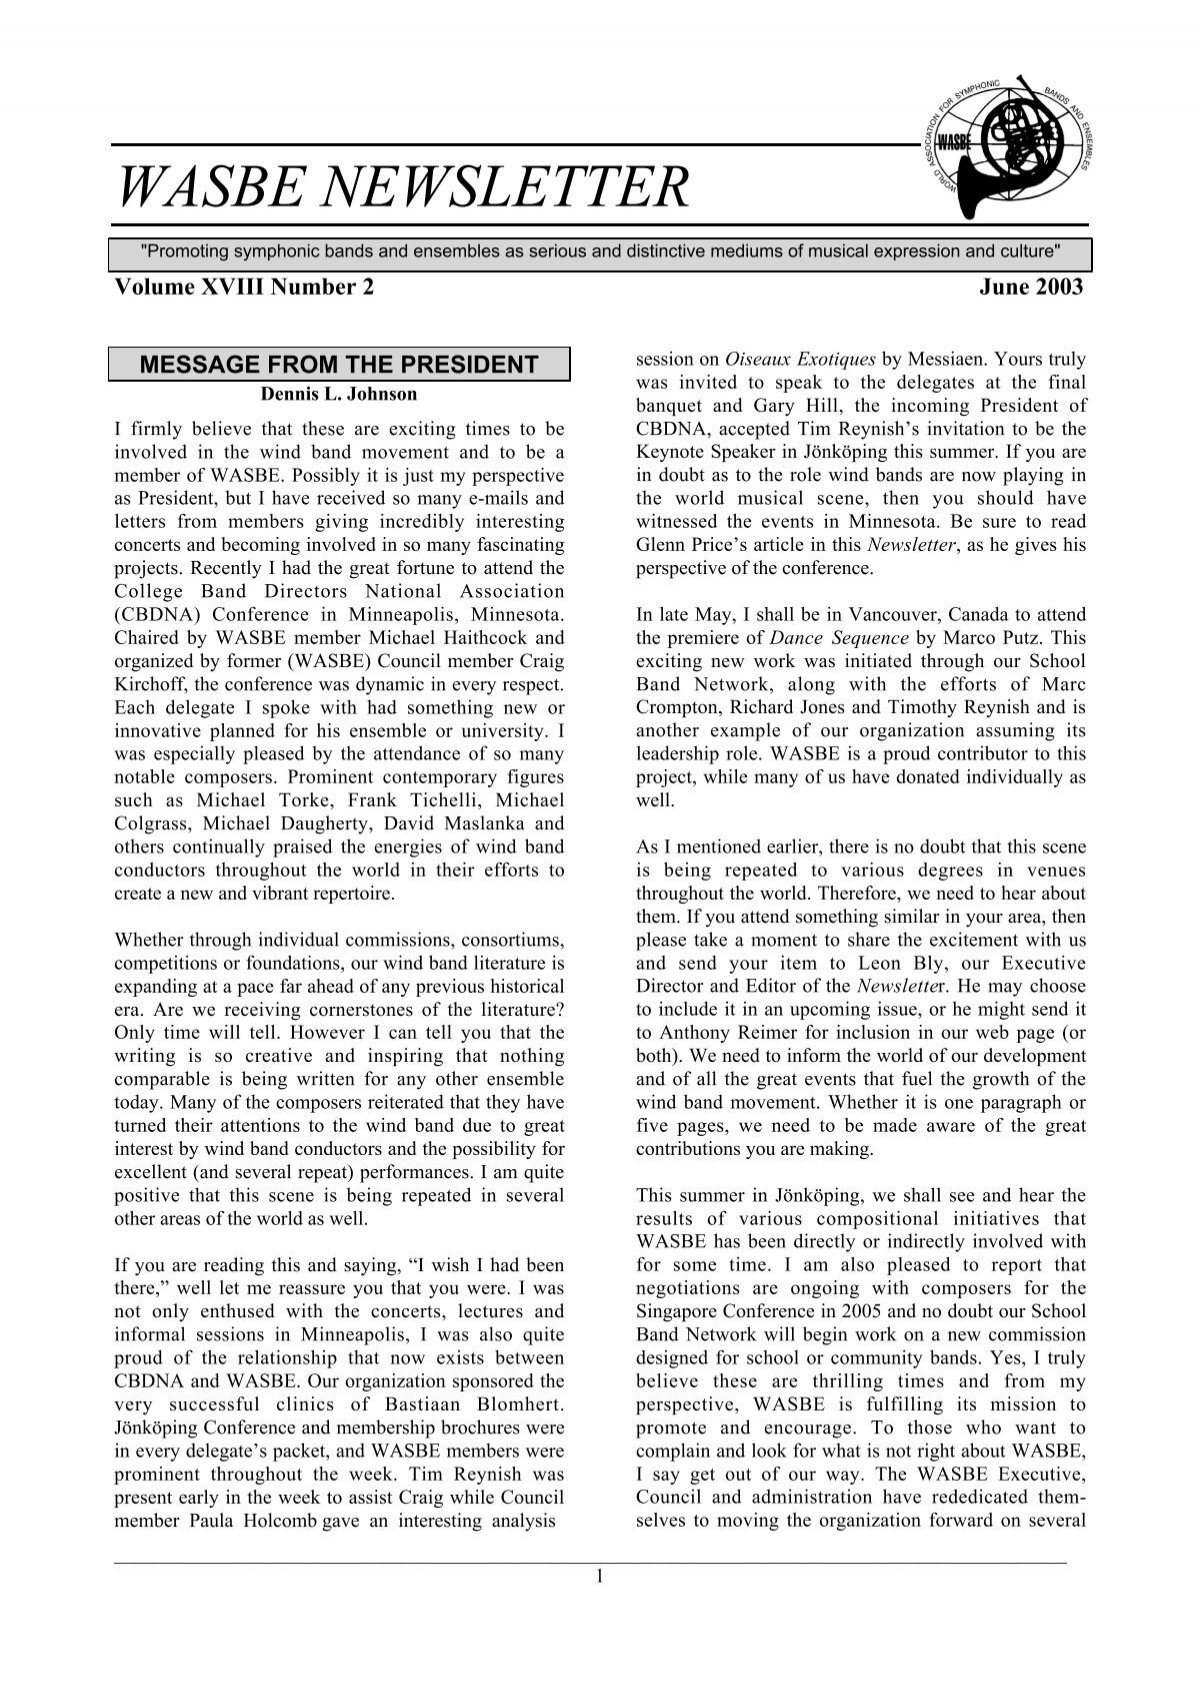 WASBE Newsletter June 2003 - World Association for Symphonic